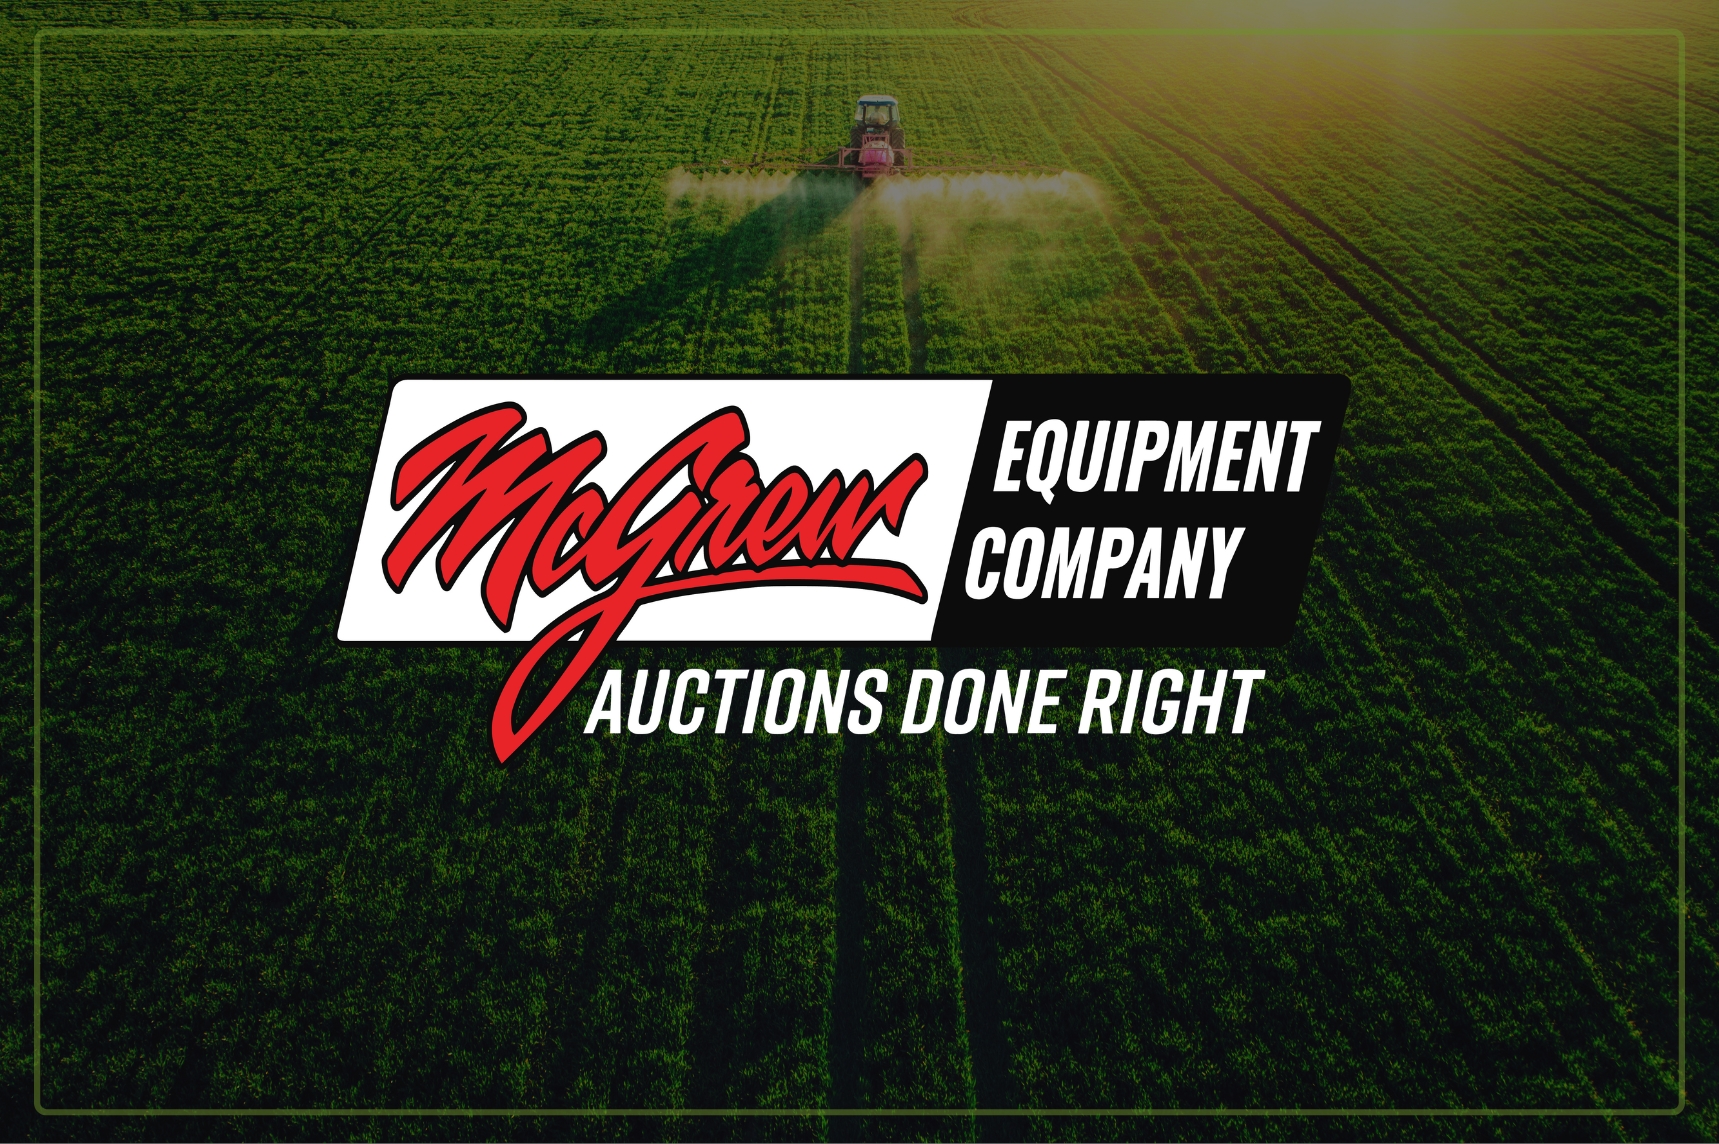 McGrew Equipment's TRACTOR TUESDAY Auction